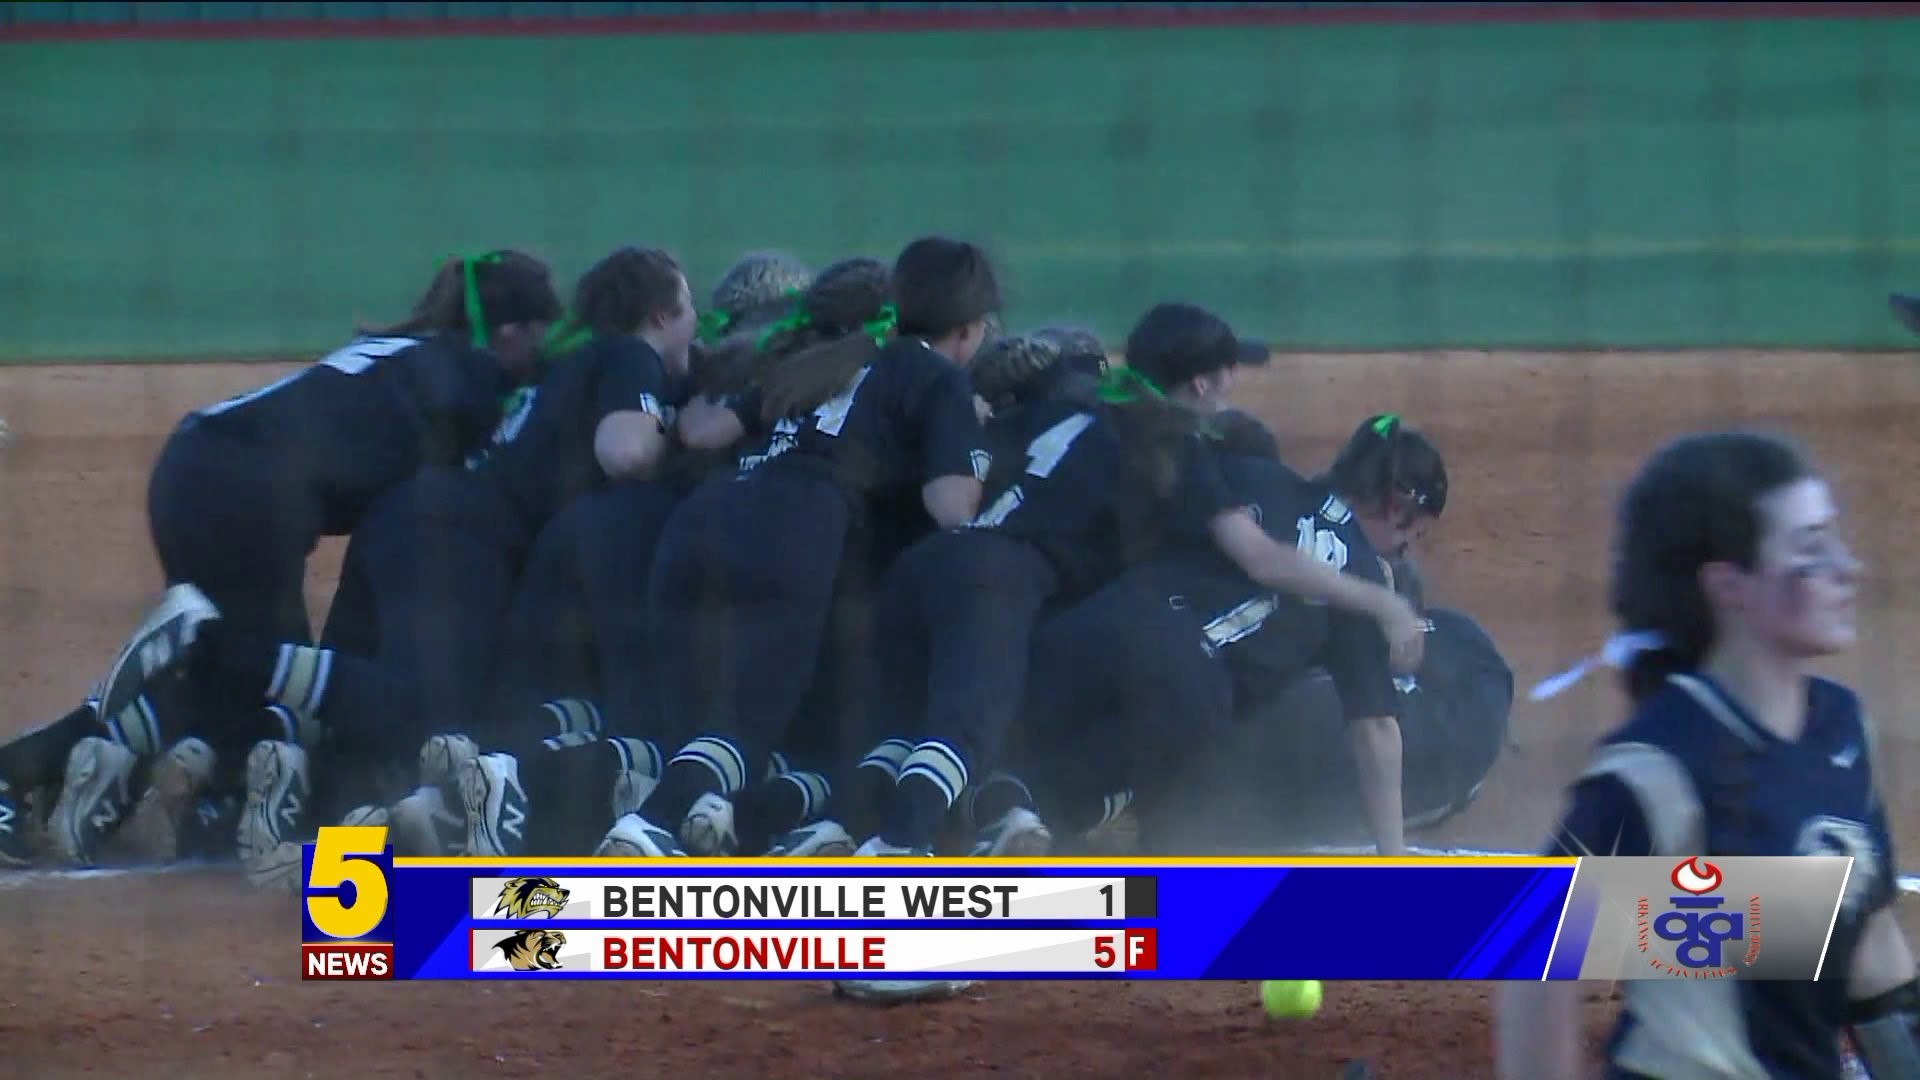 Bentonville wins 3rd straight softball title